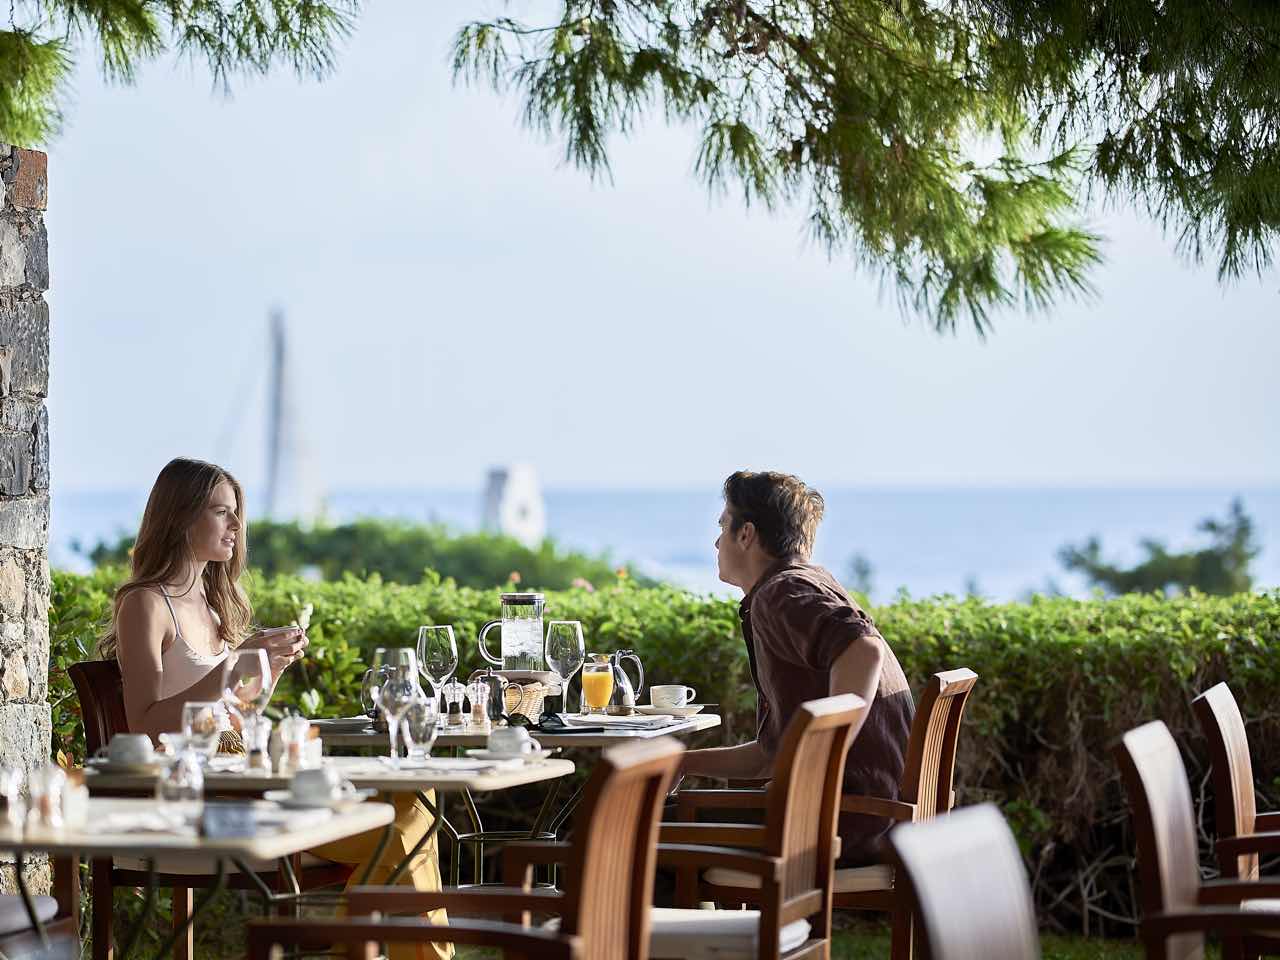 New Special Offer At Our Superb St. Nicolas Bay Hotel - Agios Nikolaos - Crete